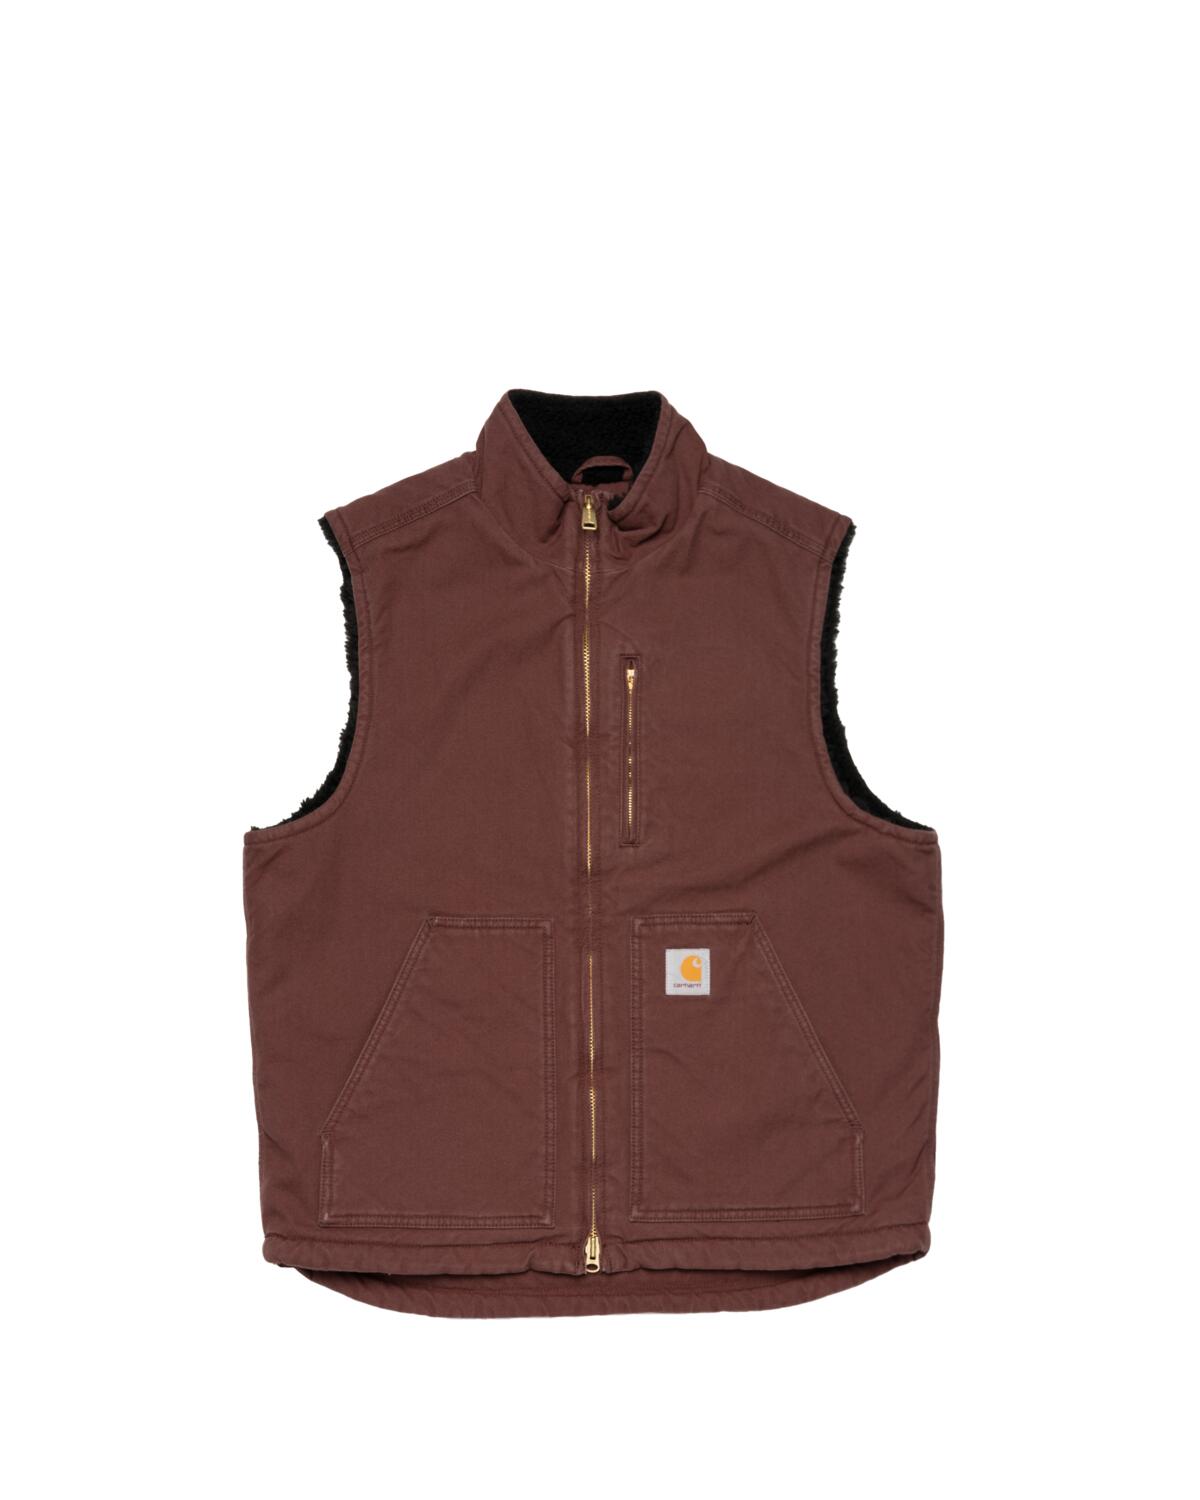 【ARMADA】Arlington vest size:s (おまけ付き)